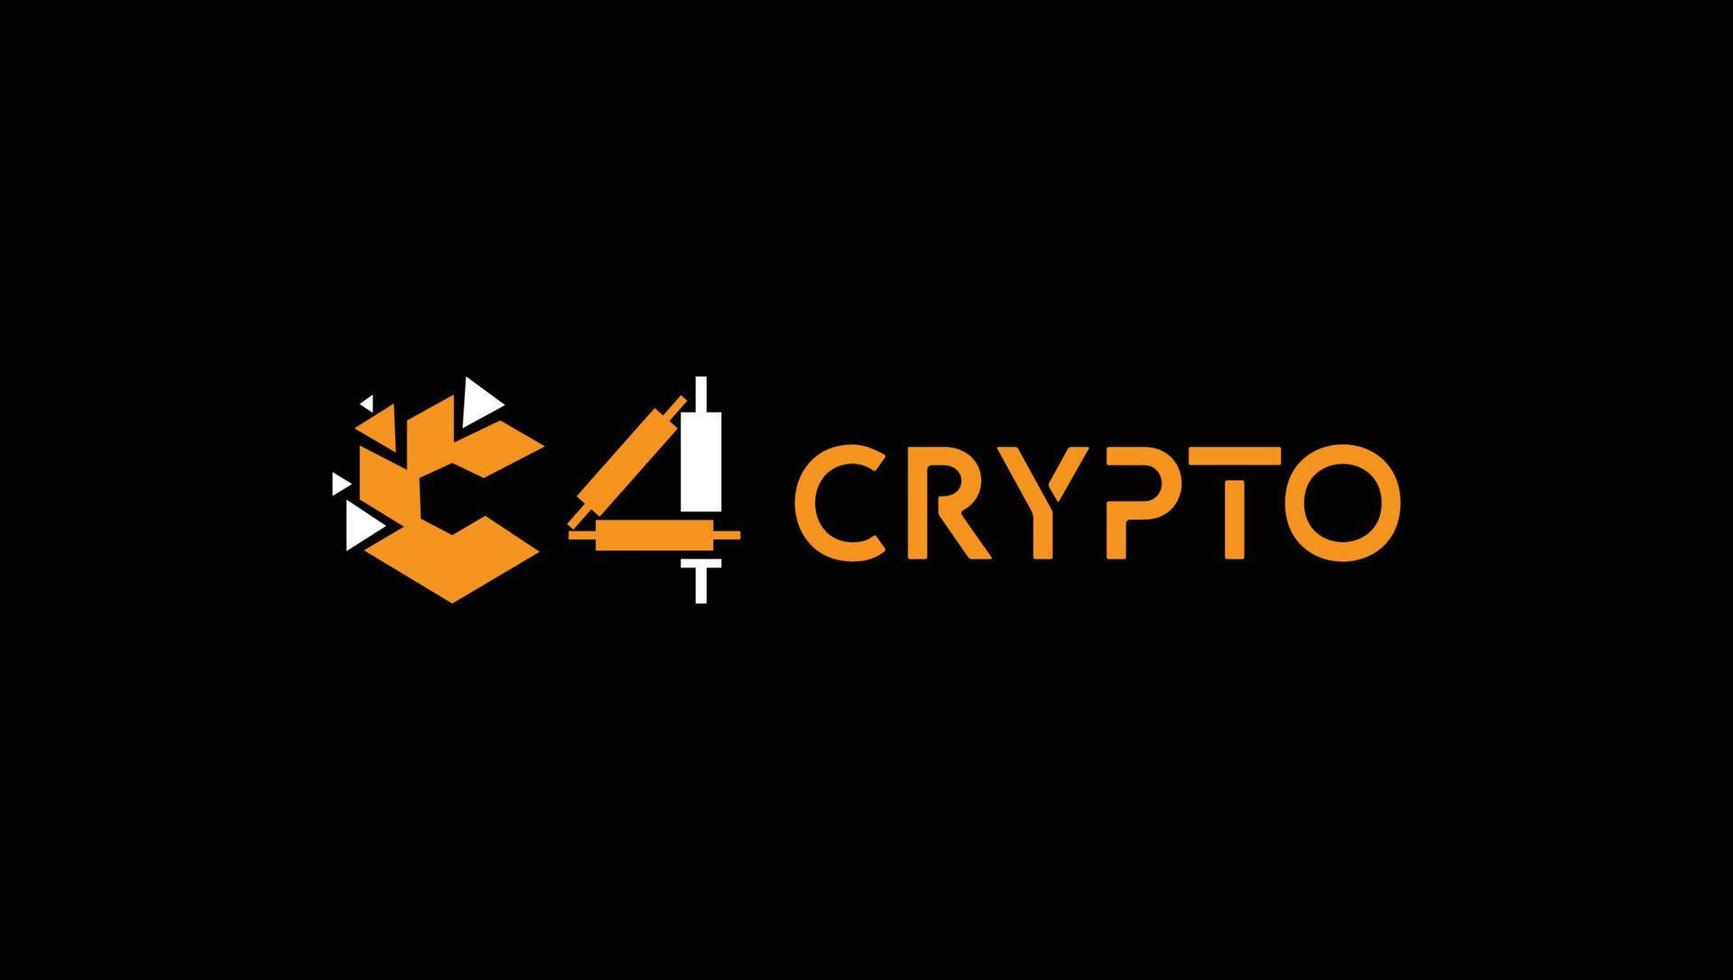 c4 crypto bitcoin nft plantilla de diseño de logotipo de comercio de divisas vector